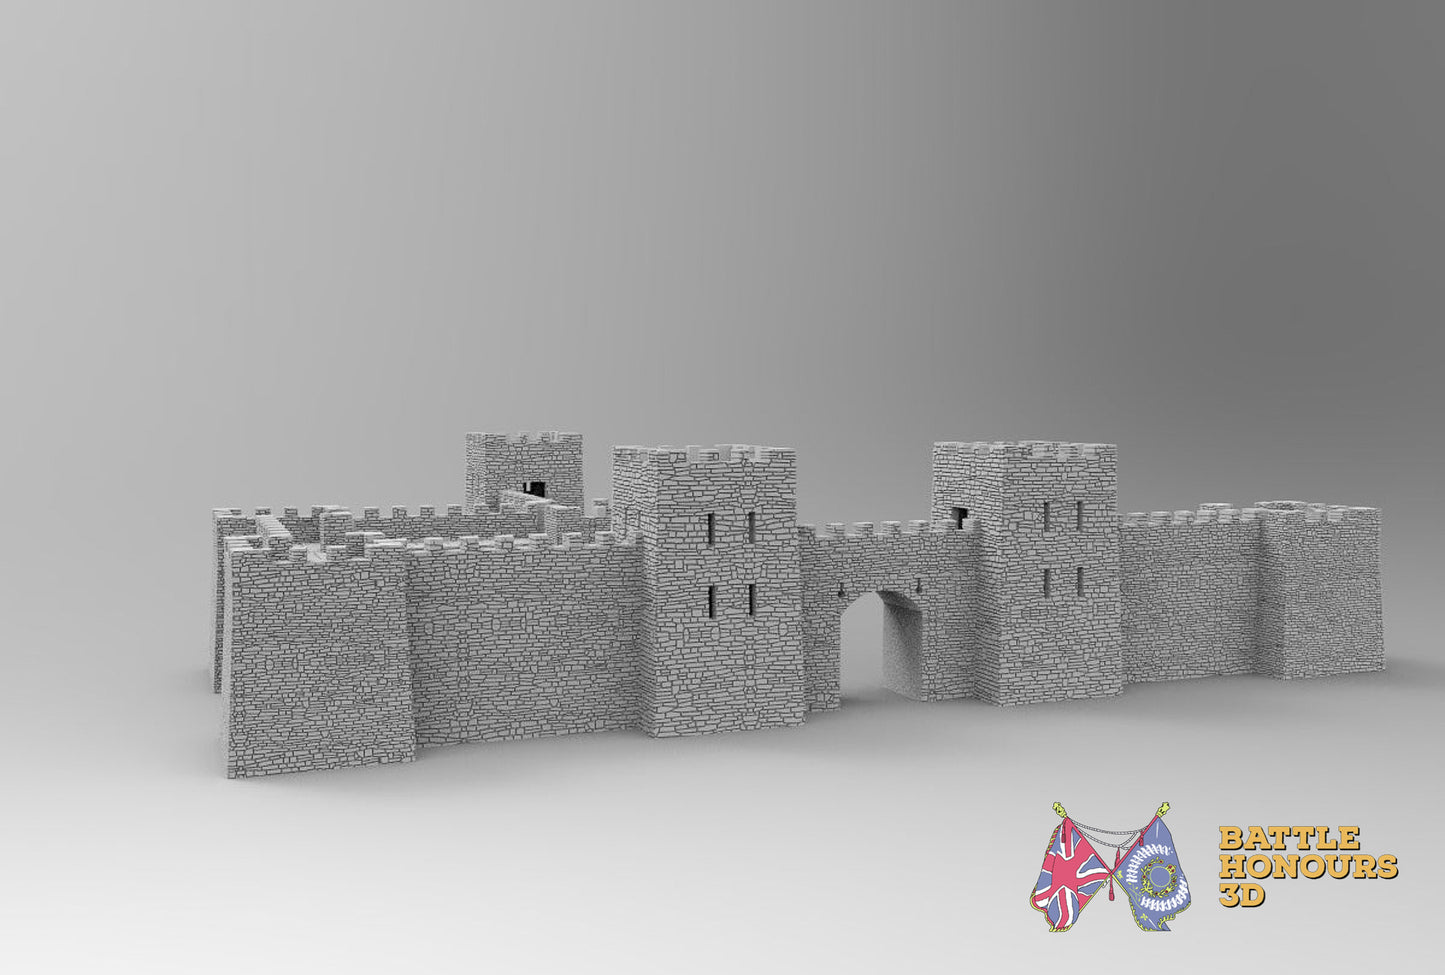 Murallas del castillo normando